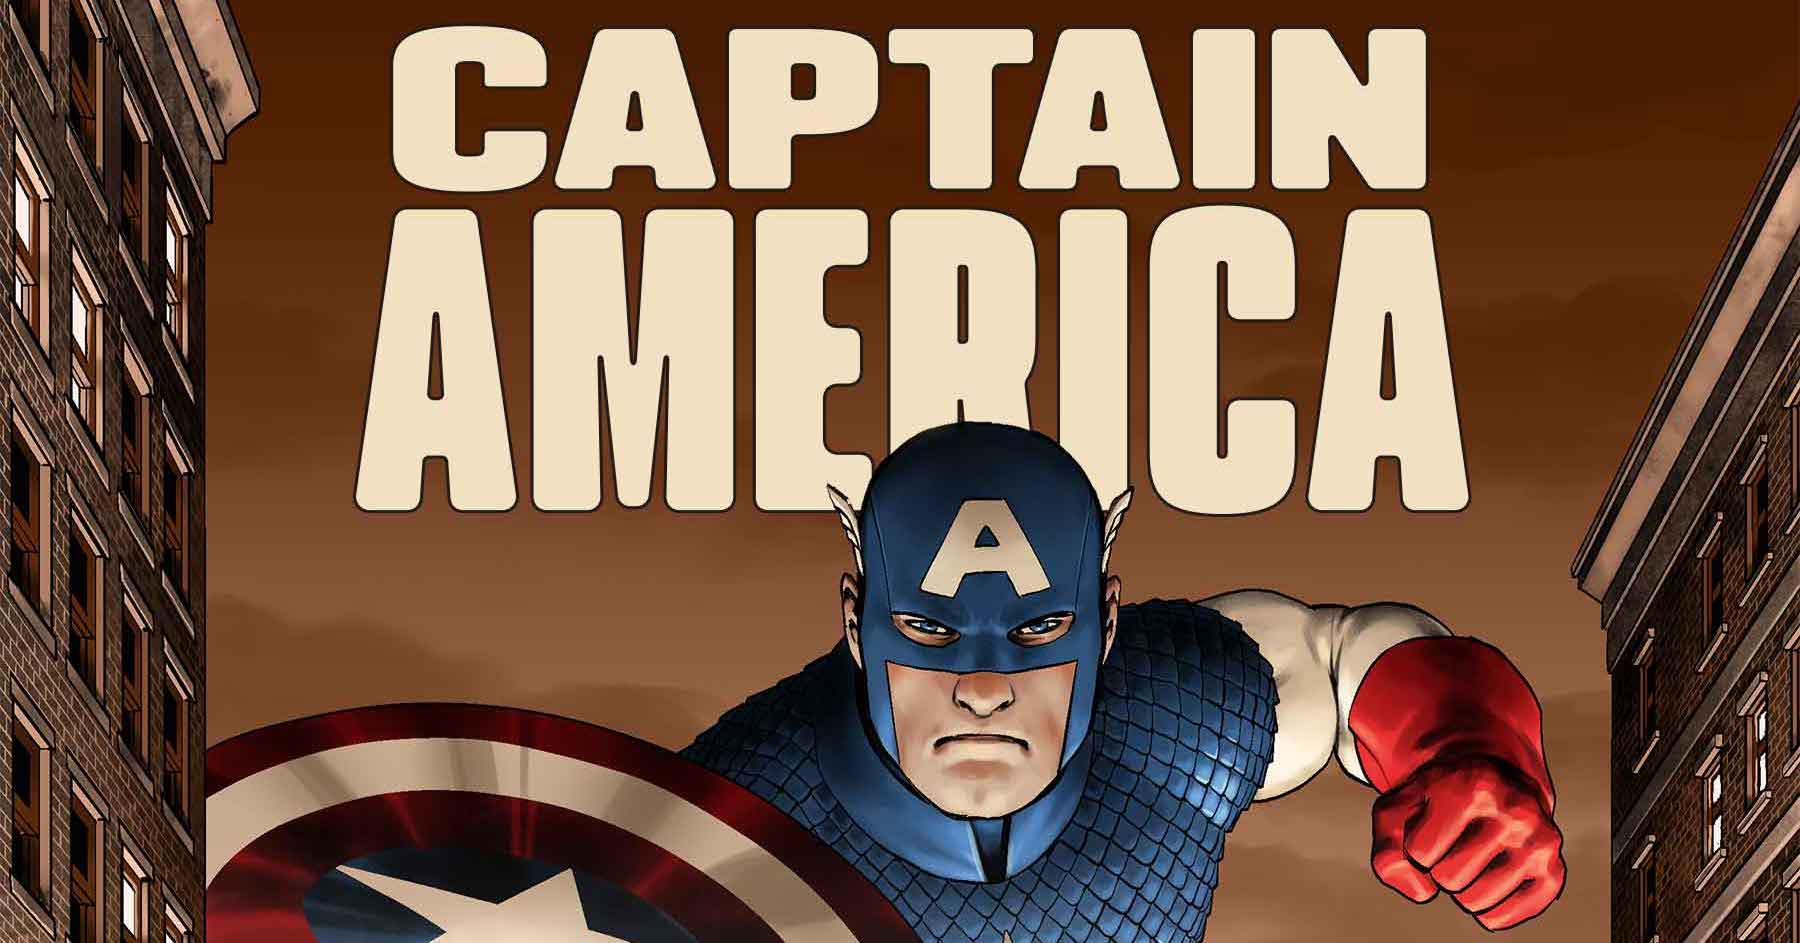 J. Michael Straczynski returns to Marvel with 'Captain America' #1